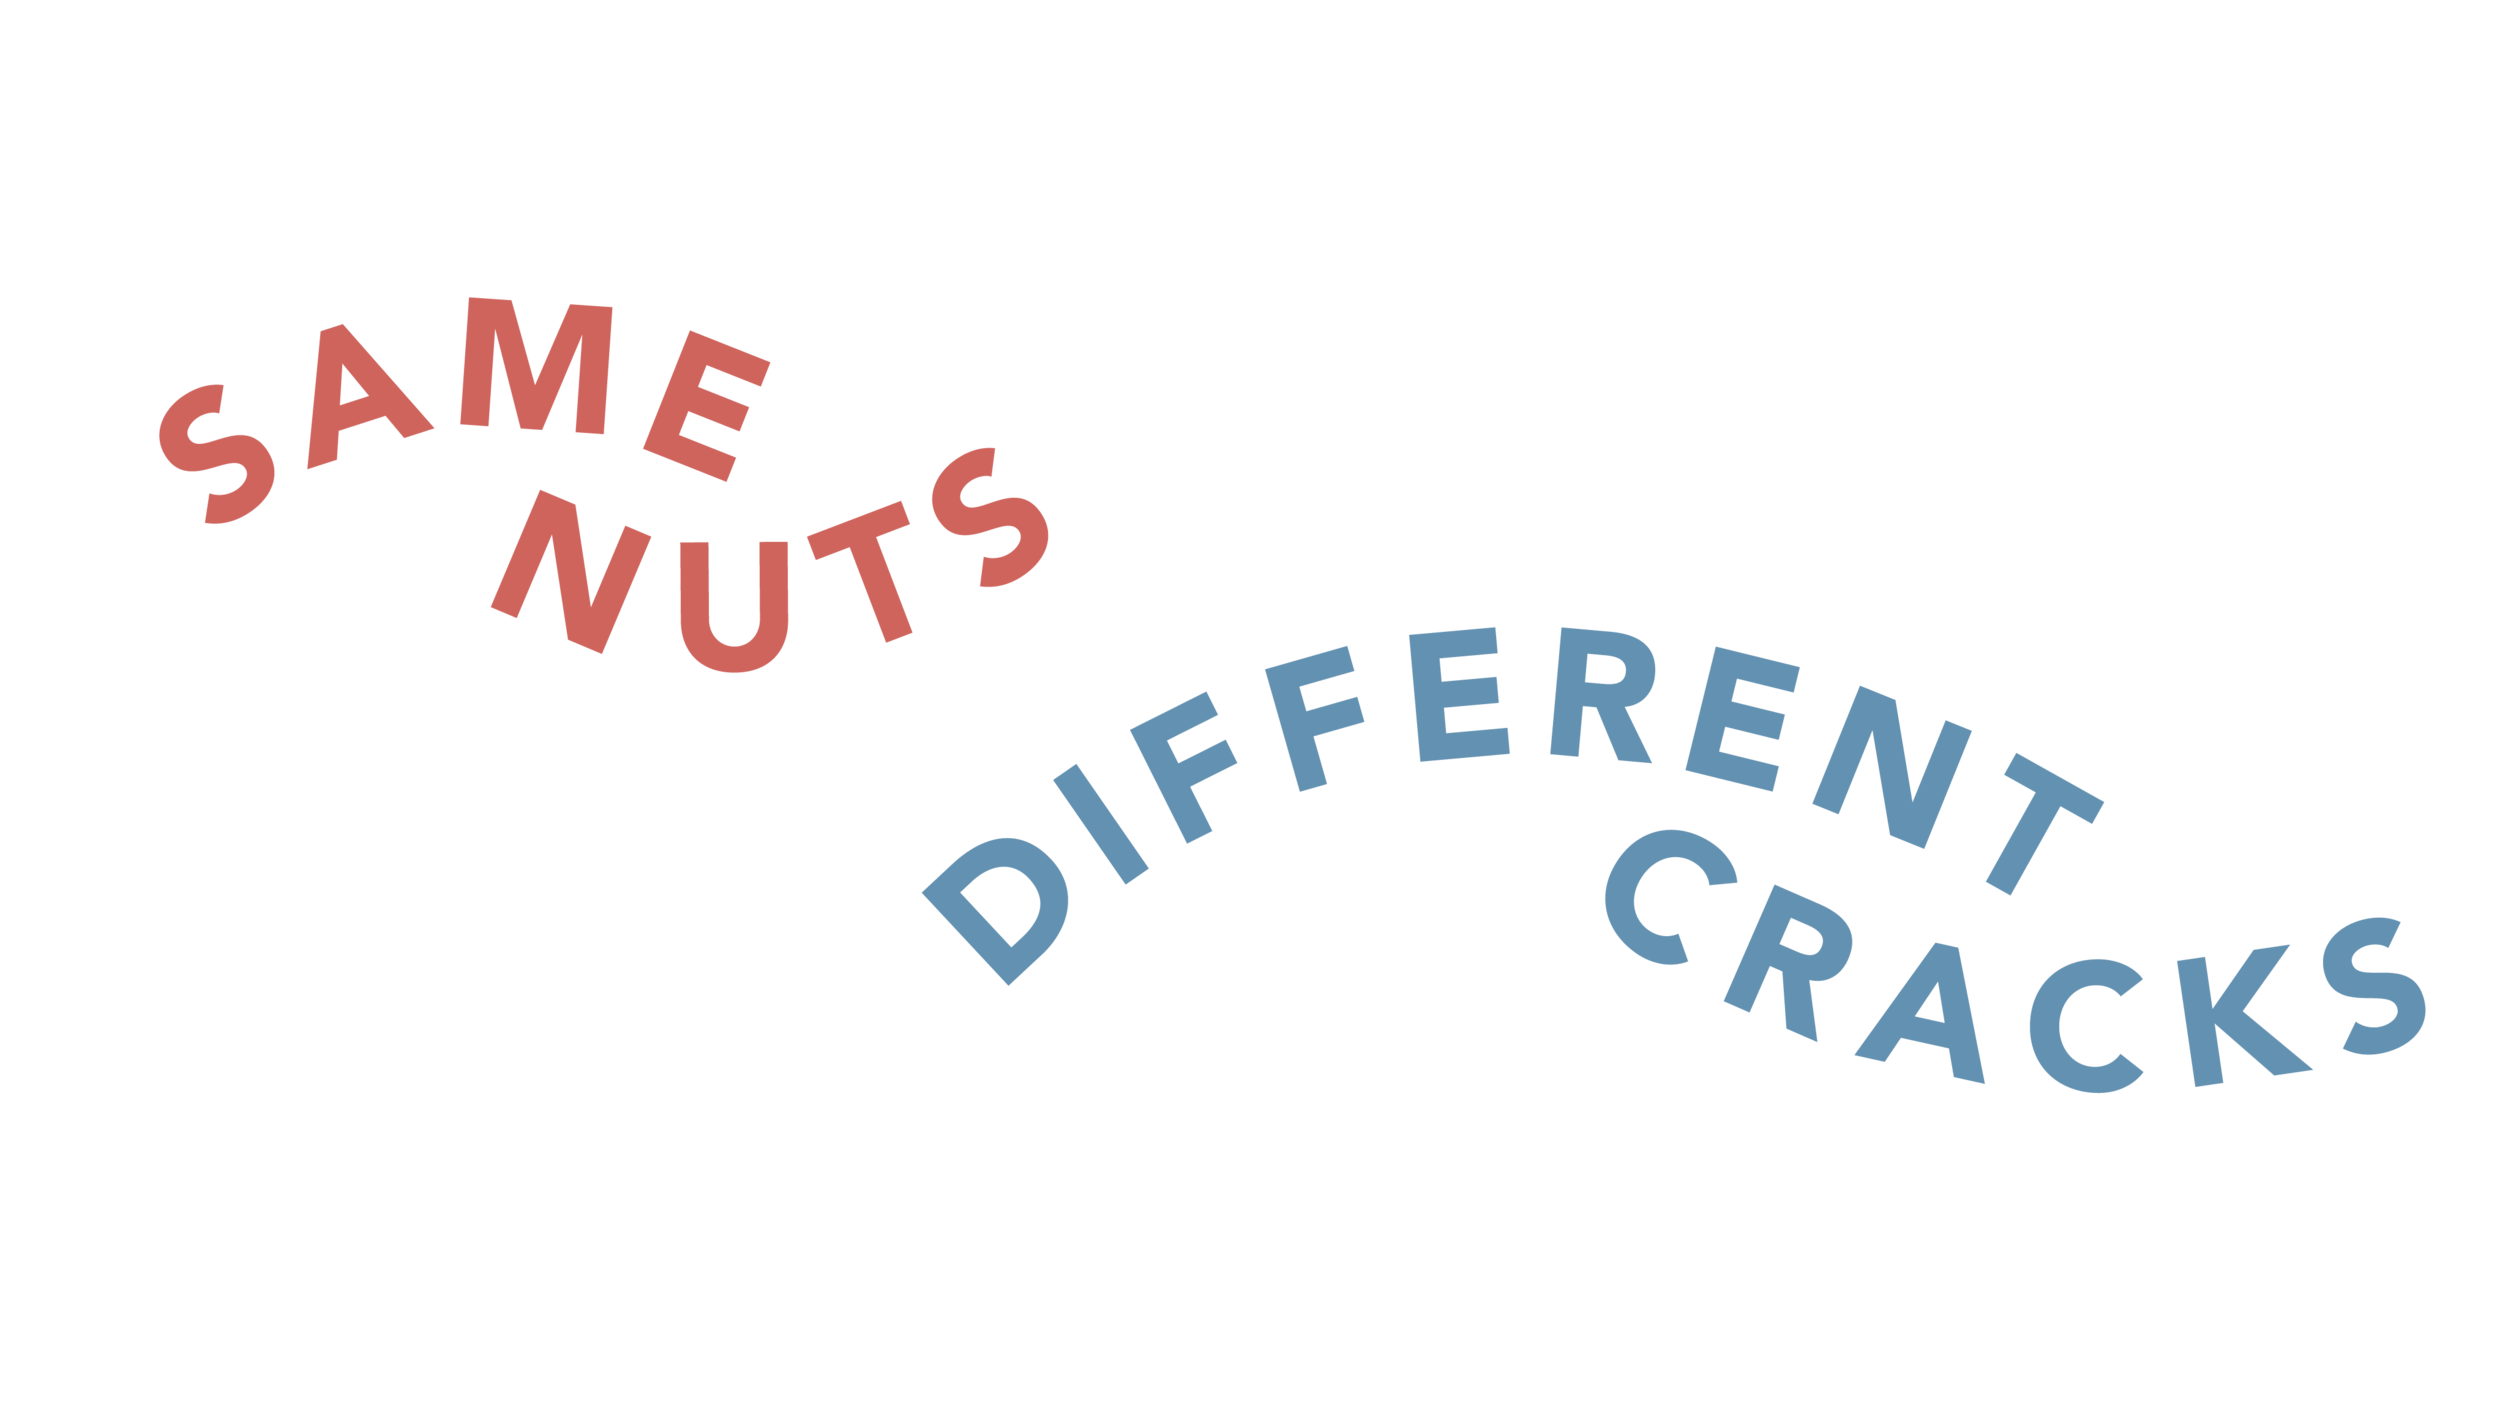 Same nuts, different cracks